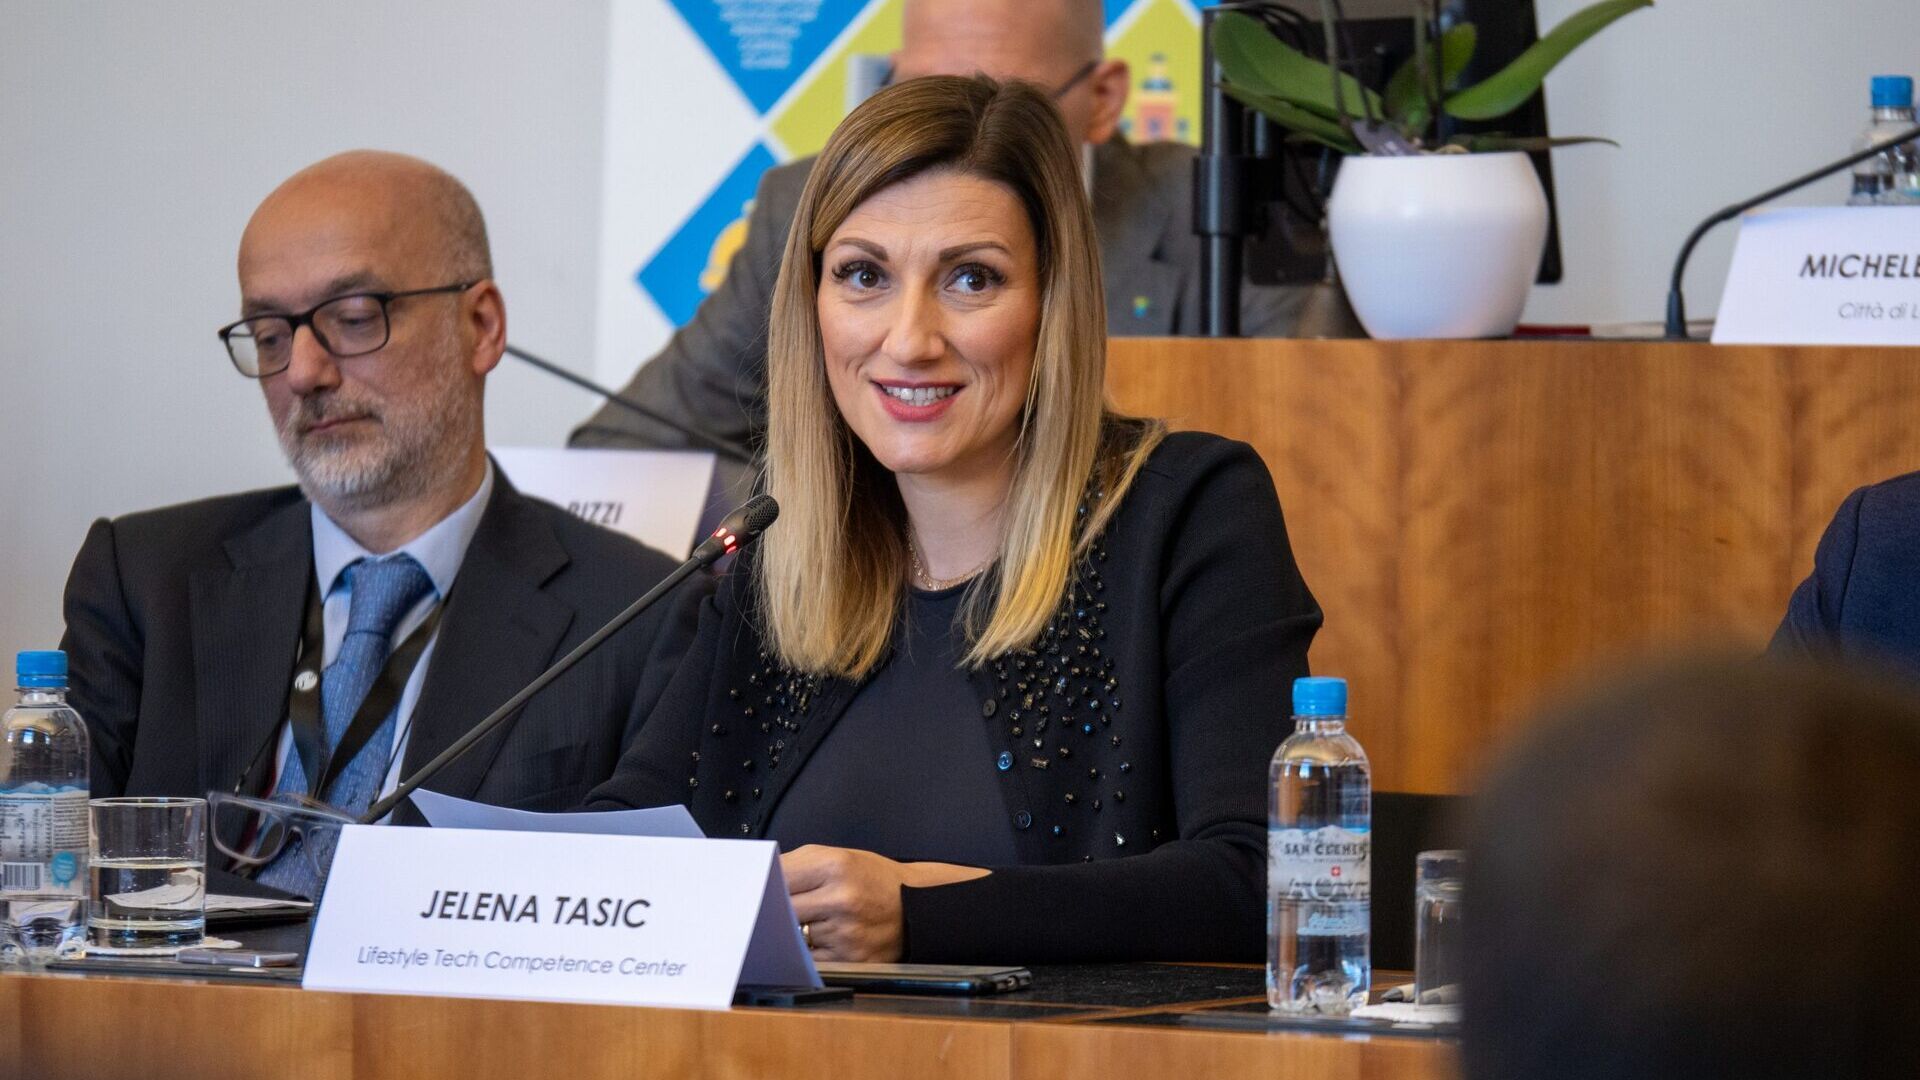 LTCC: Jelena Tašić Pizzolato er administrerende direktør i Lifestyle Tech Competence Center Association